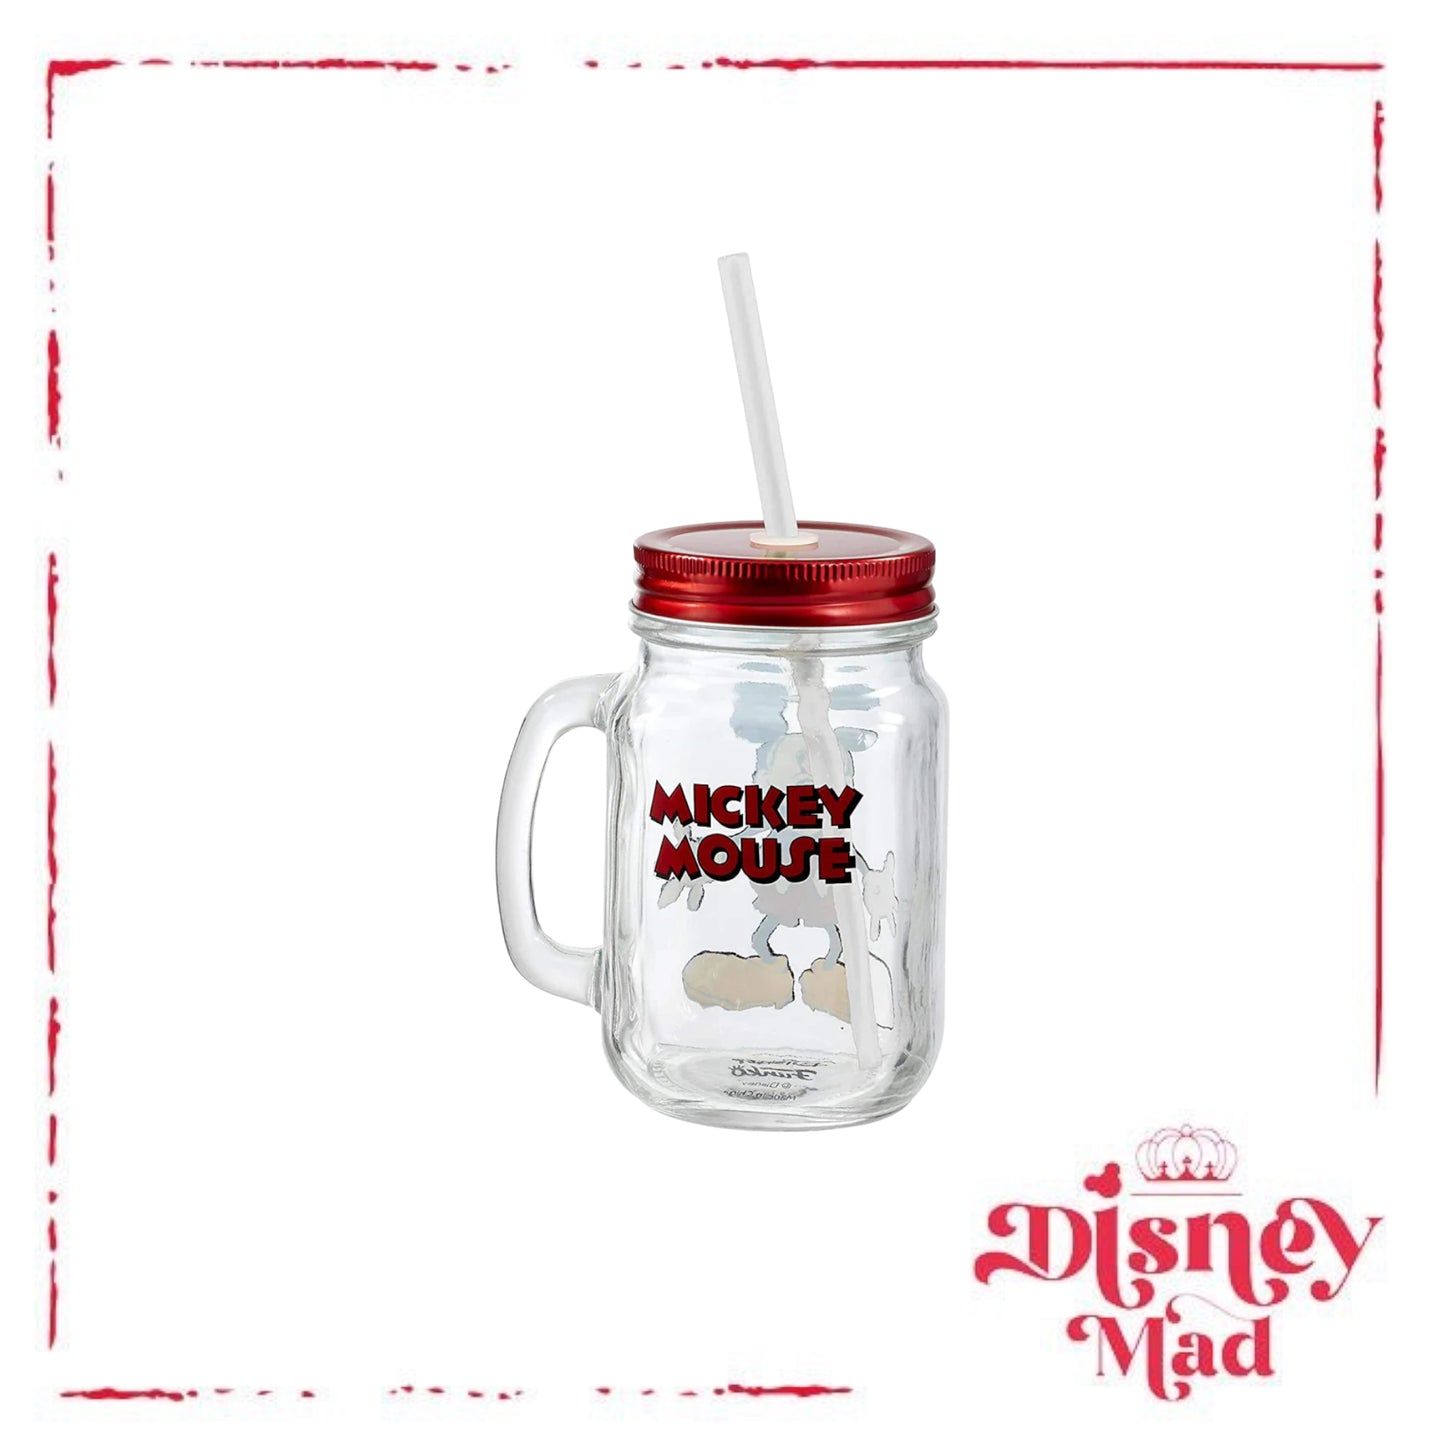 Funko Disney Mickey Mouse Glass Mason Jar Mug with Straw